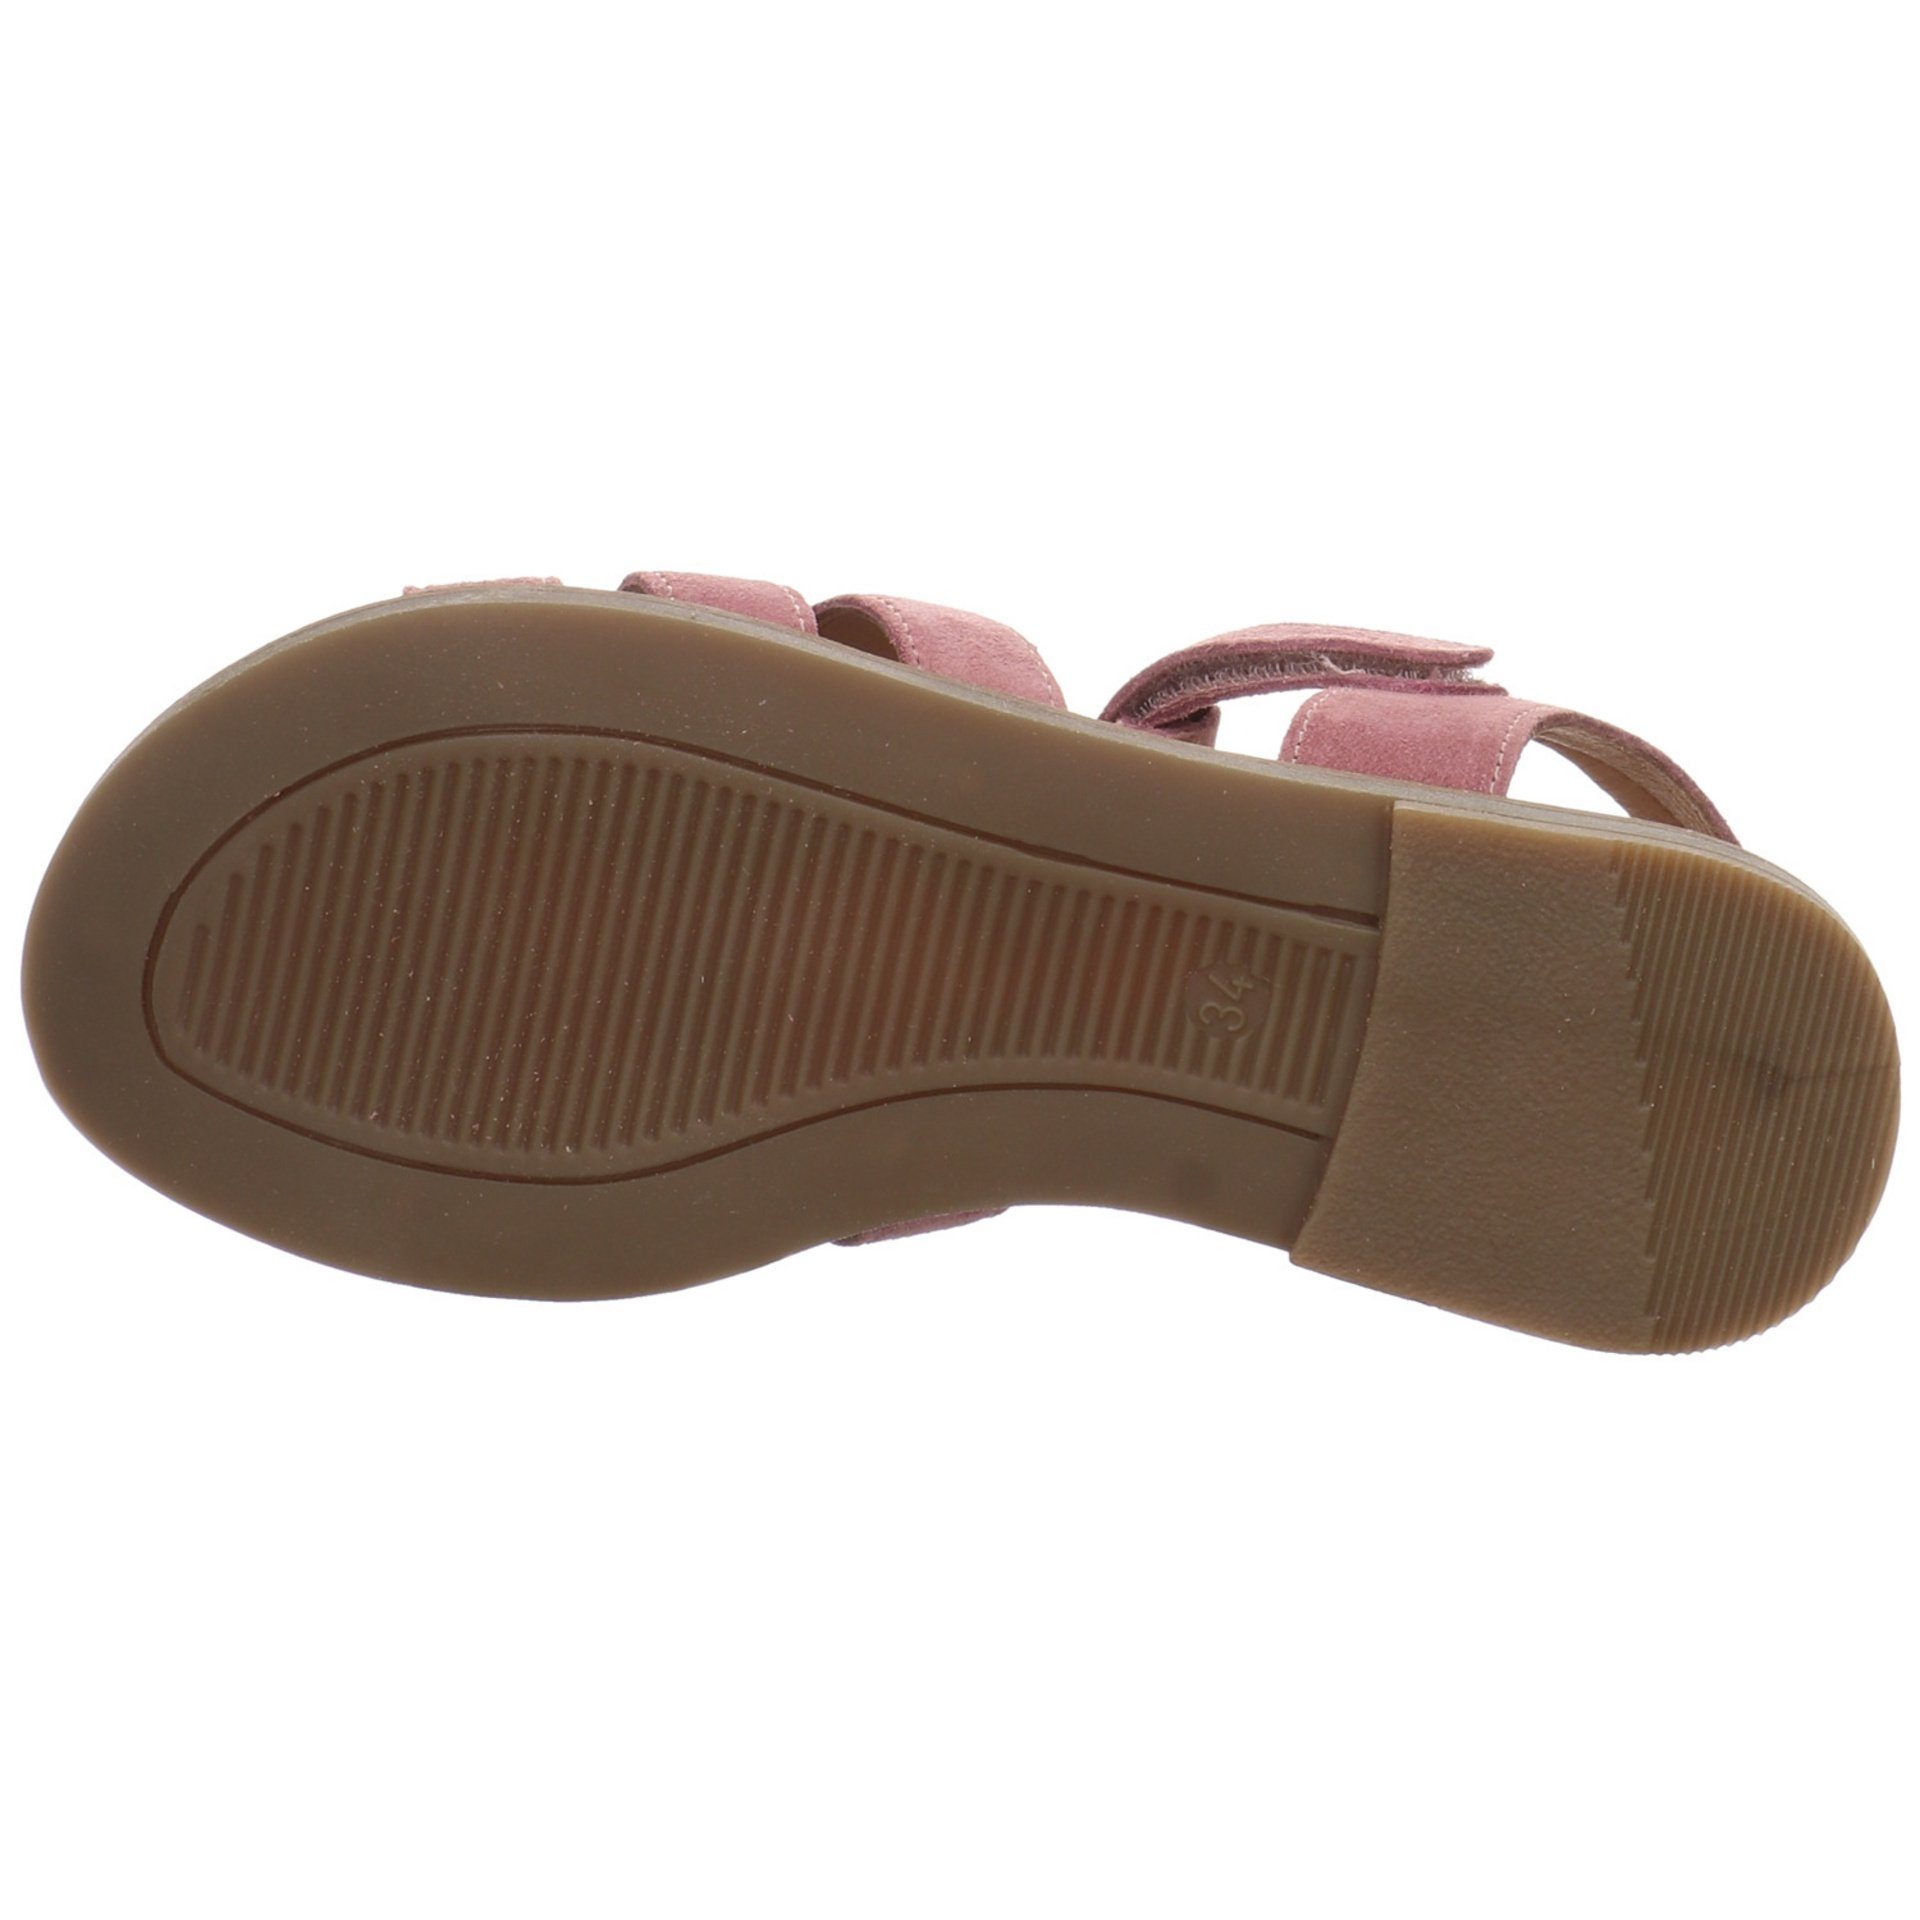 Clic Mädchen Schuhe Sandalen Lilac/Tania Veloursleder Sandale Kinderschuhe Sandale